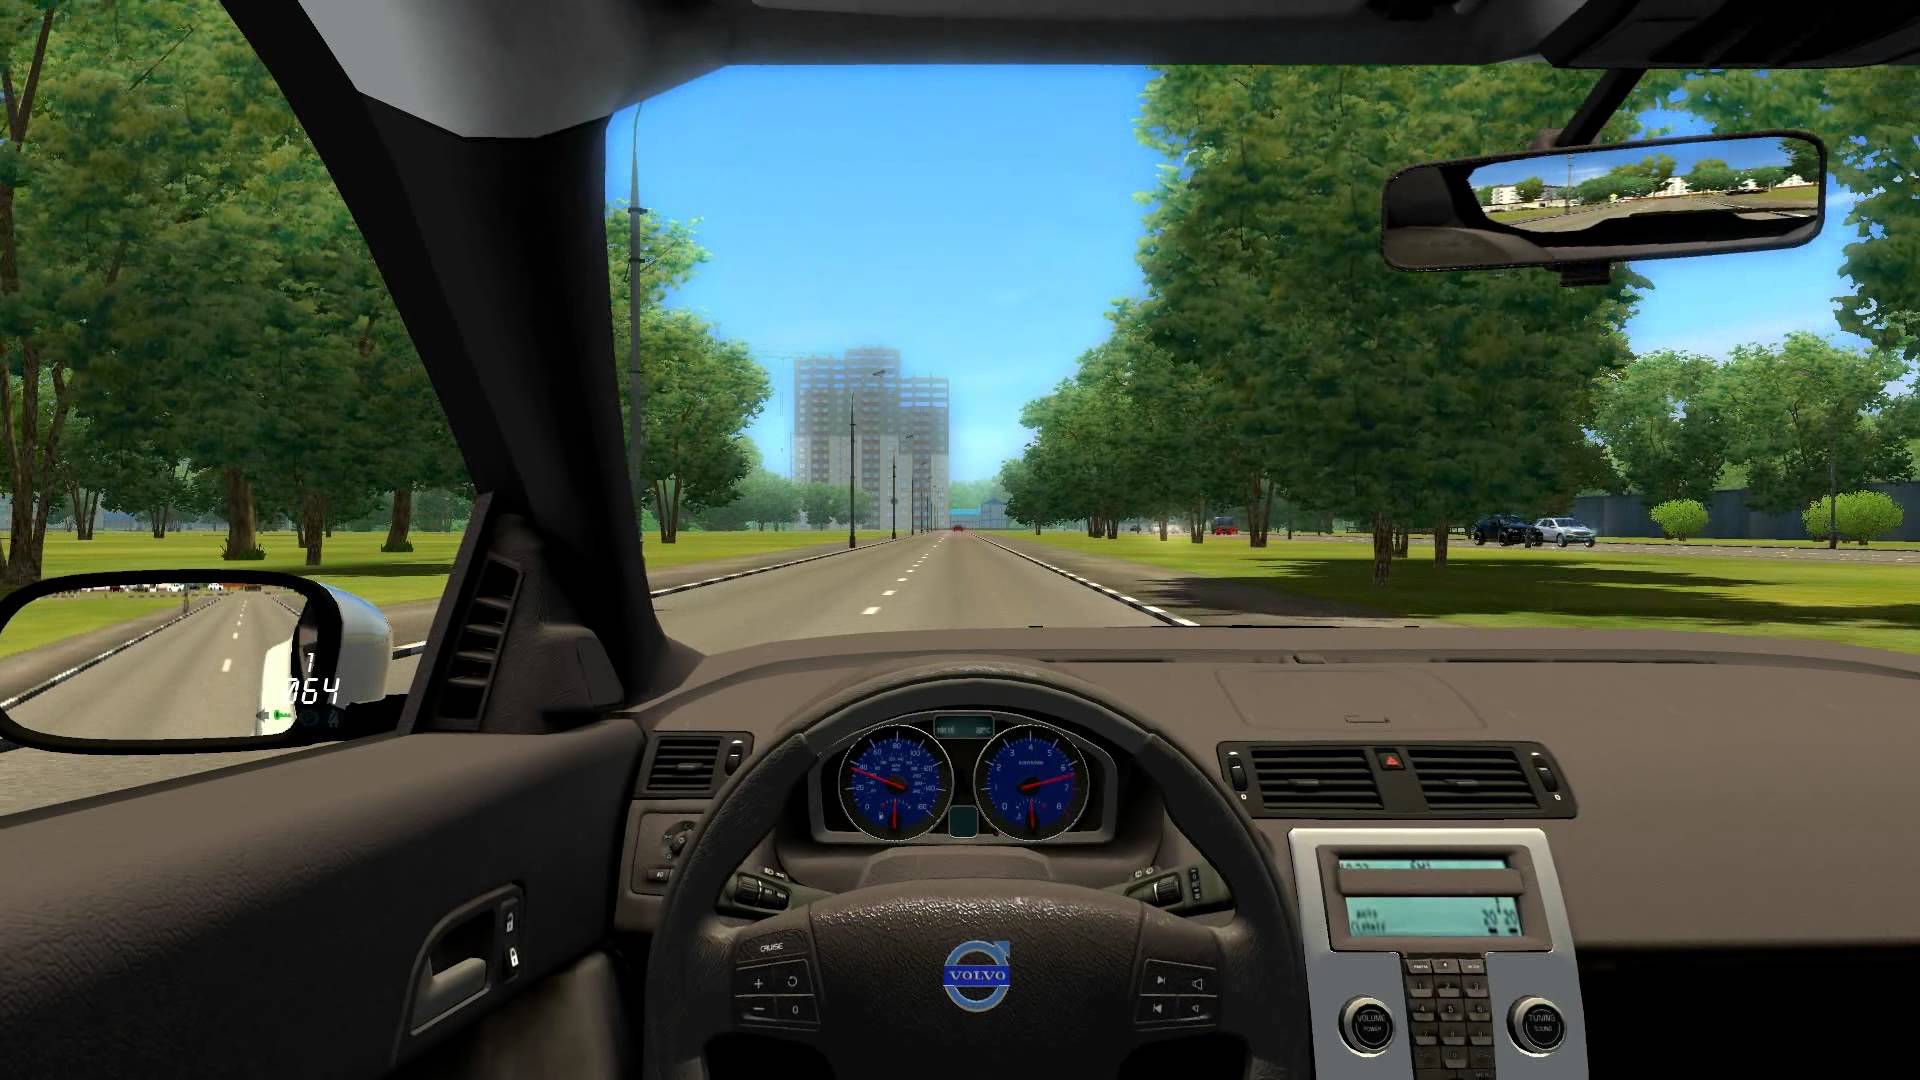 Ucds car driving simulator. 3д инструктор 2.2.7 100 машин 2020. 3d инструктор v.2.2.7. Симулятор вождения 3д инструктор 2. Симулятор автошколы 3д инструктор 2019.